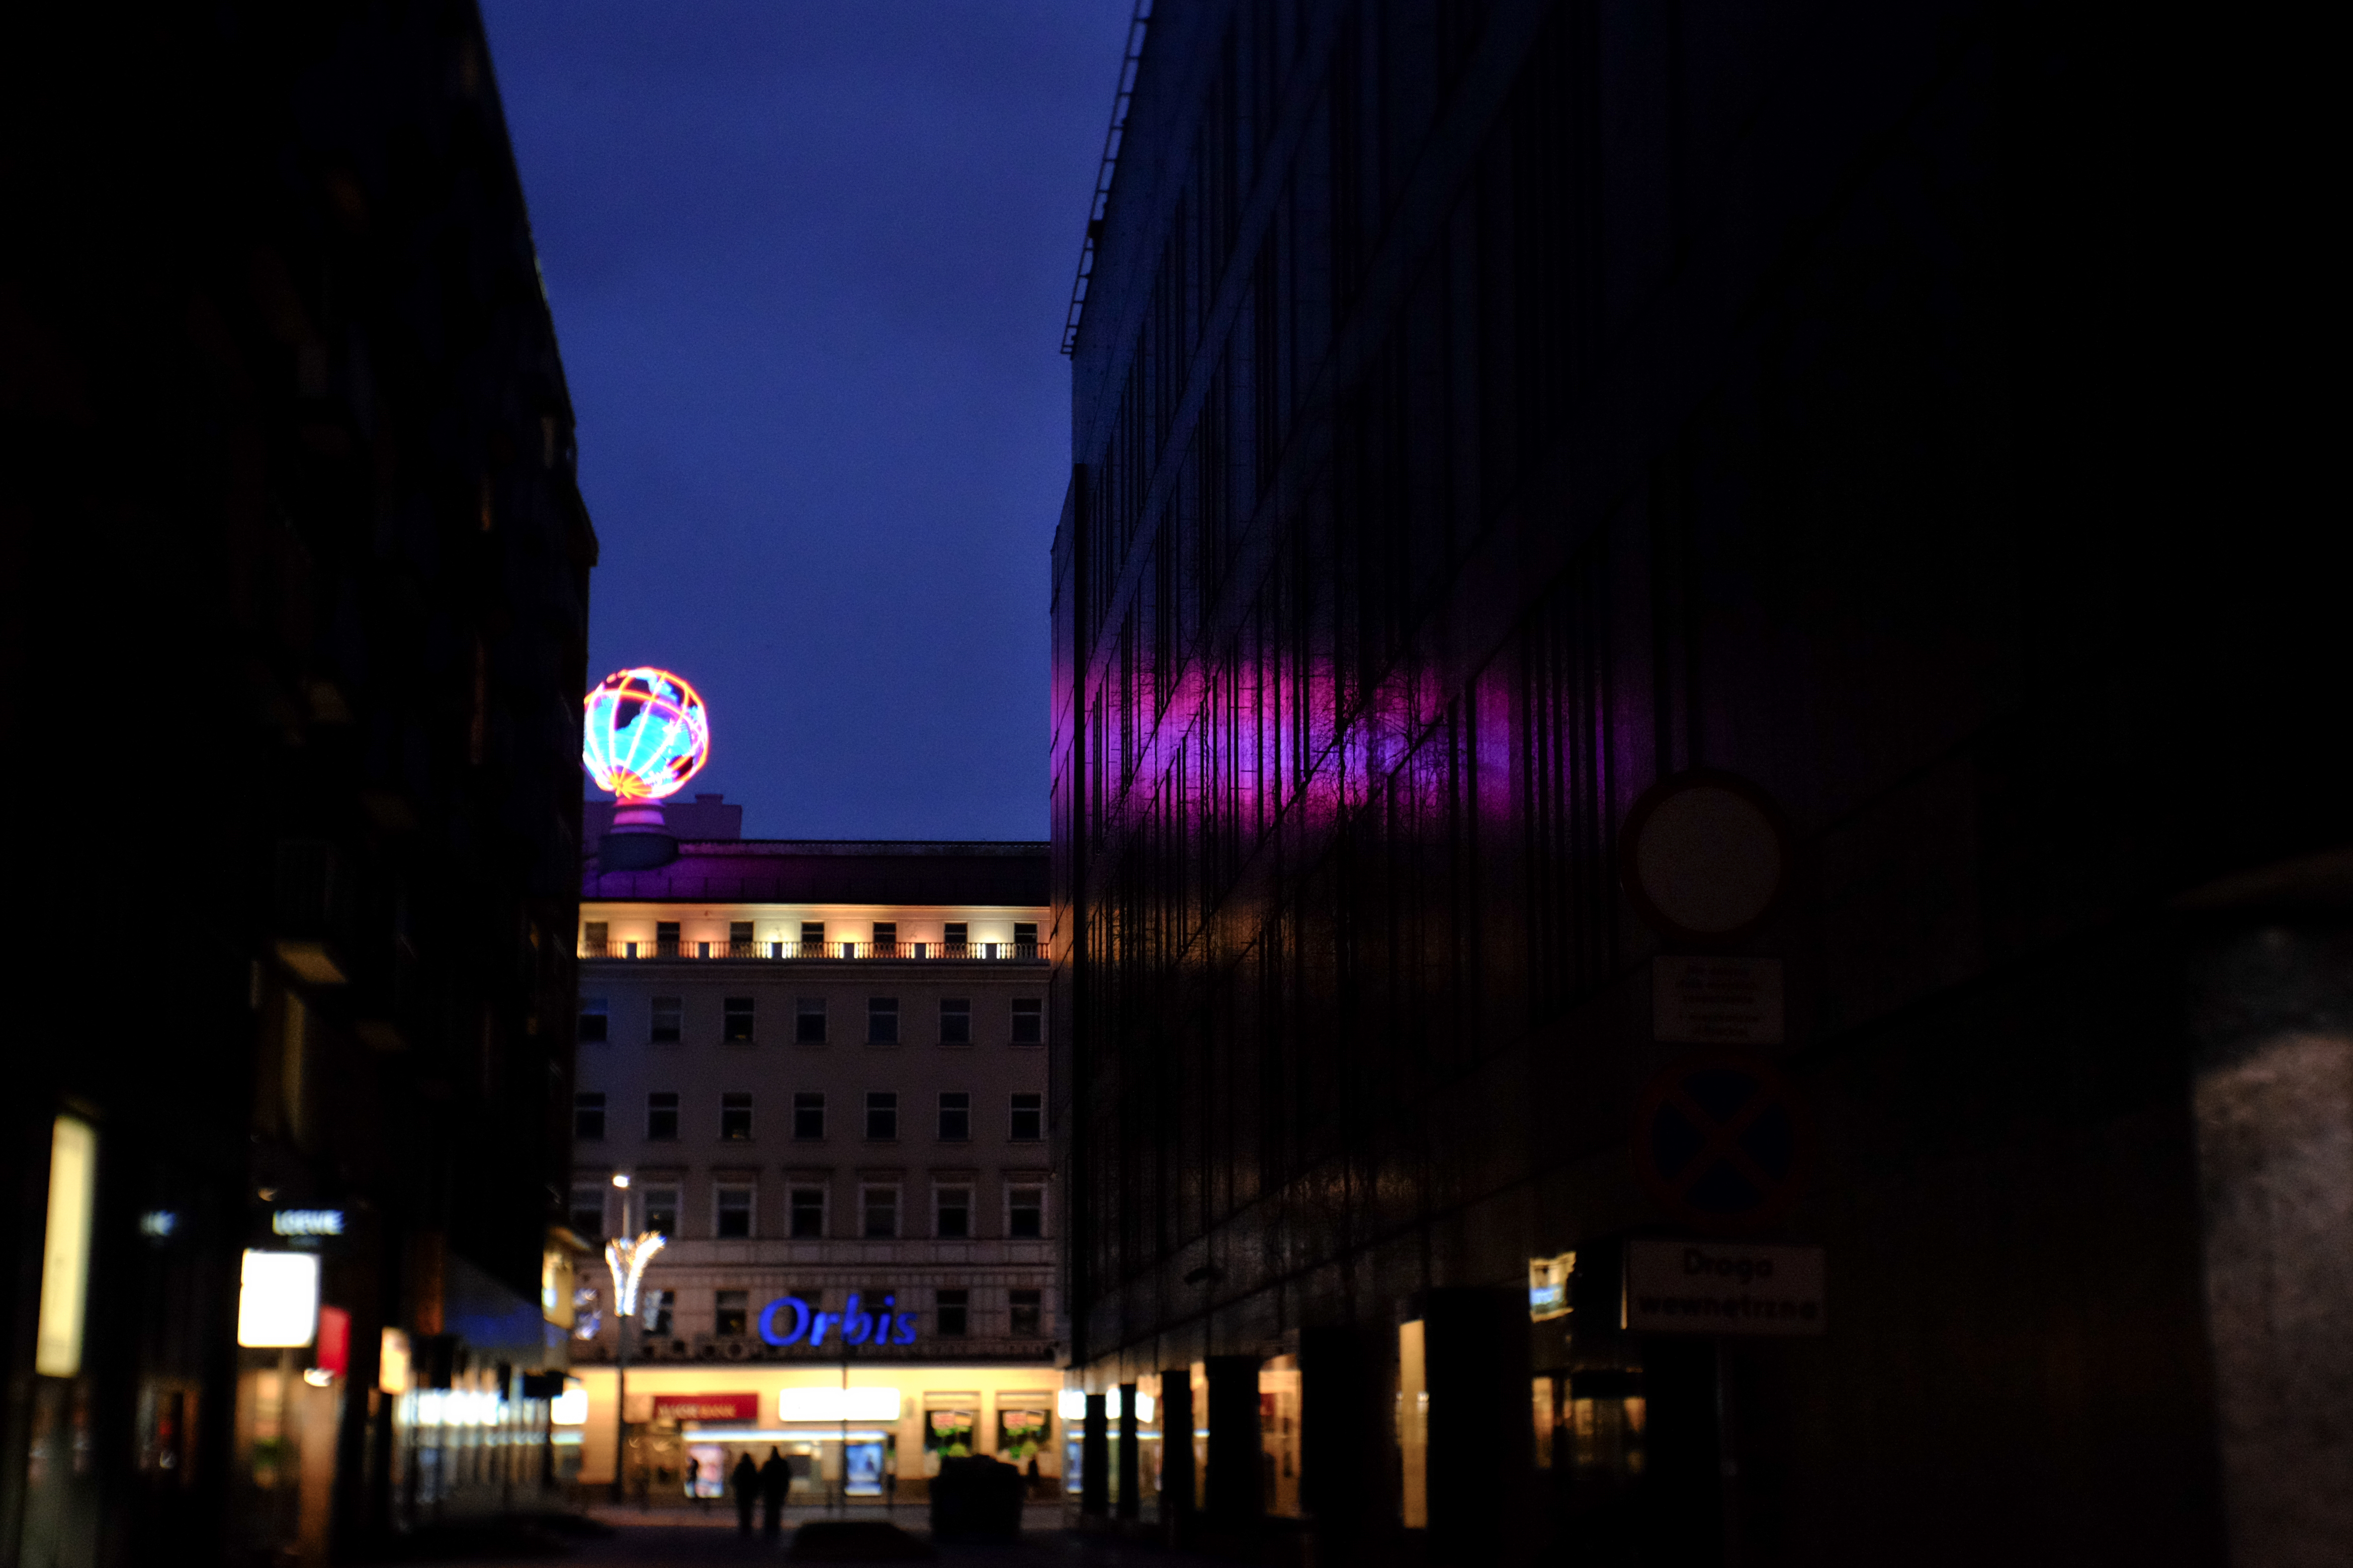 Illuminated led globe in the city at night - freestocks.org - Free ...